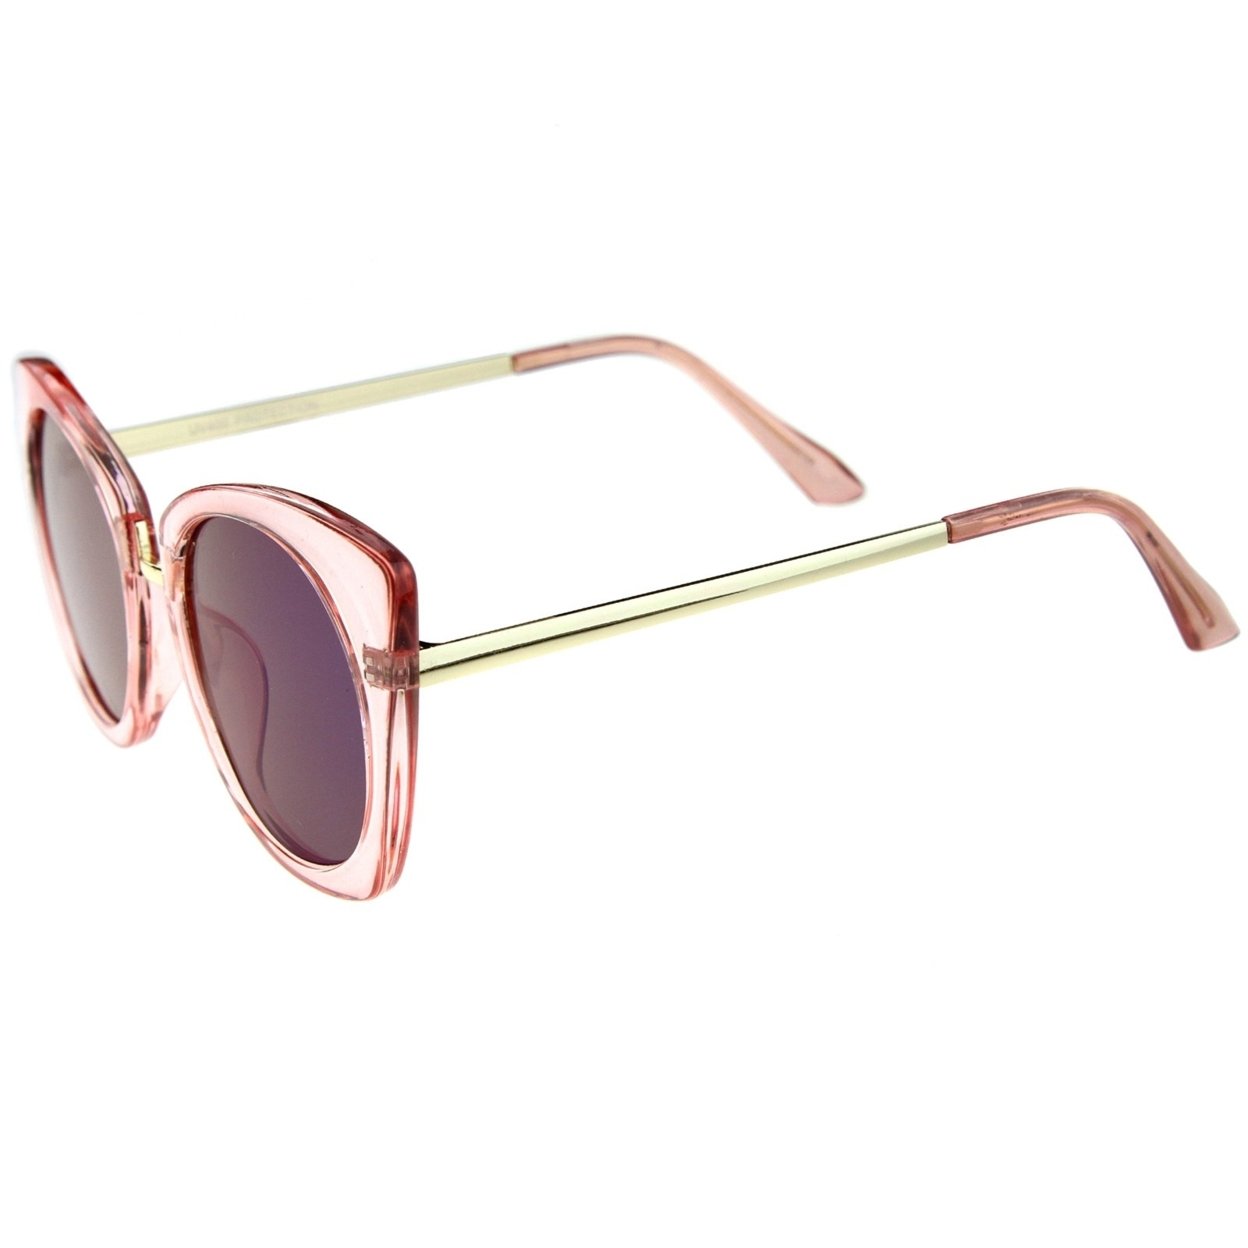 Women's Crystal Frame Colored Mirror Flat Lens Round Cat Eye Sunglasses 52mm - Smoke-Gold / Magenta Mirror